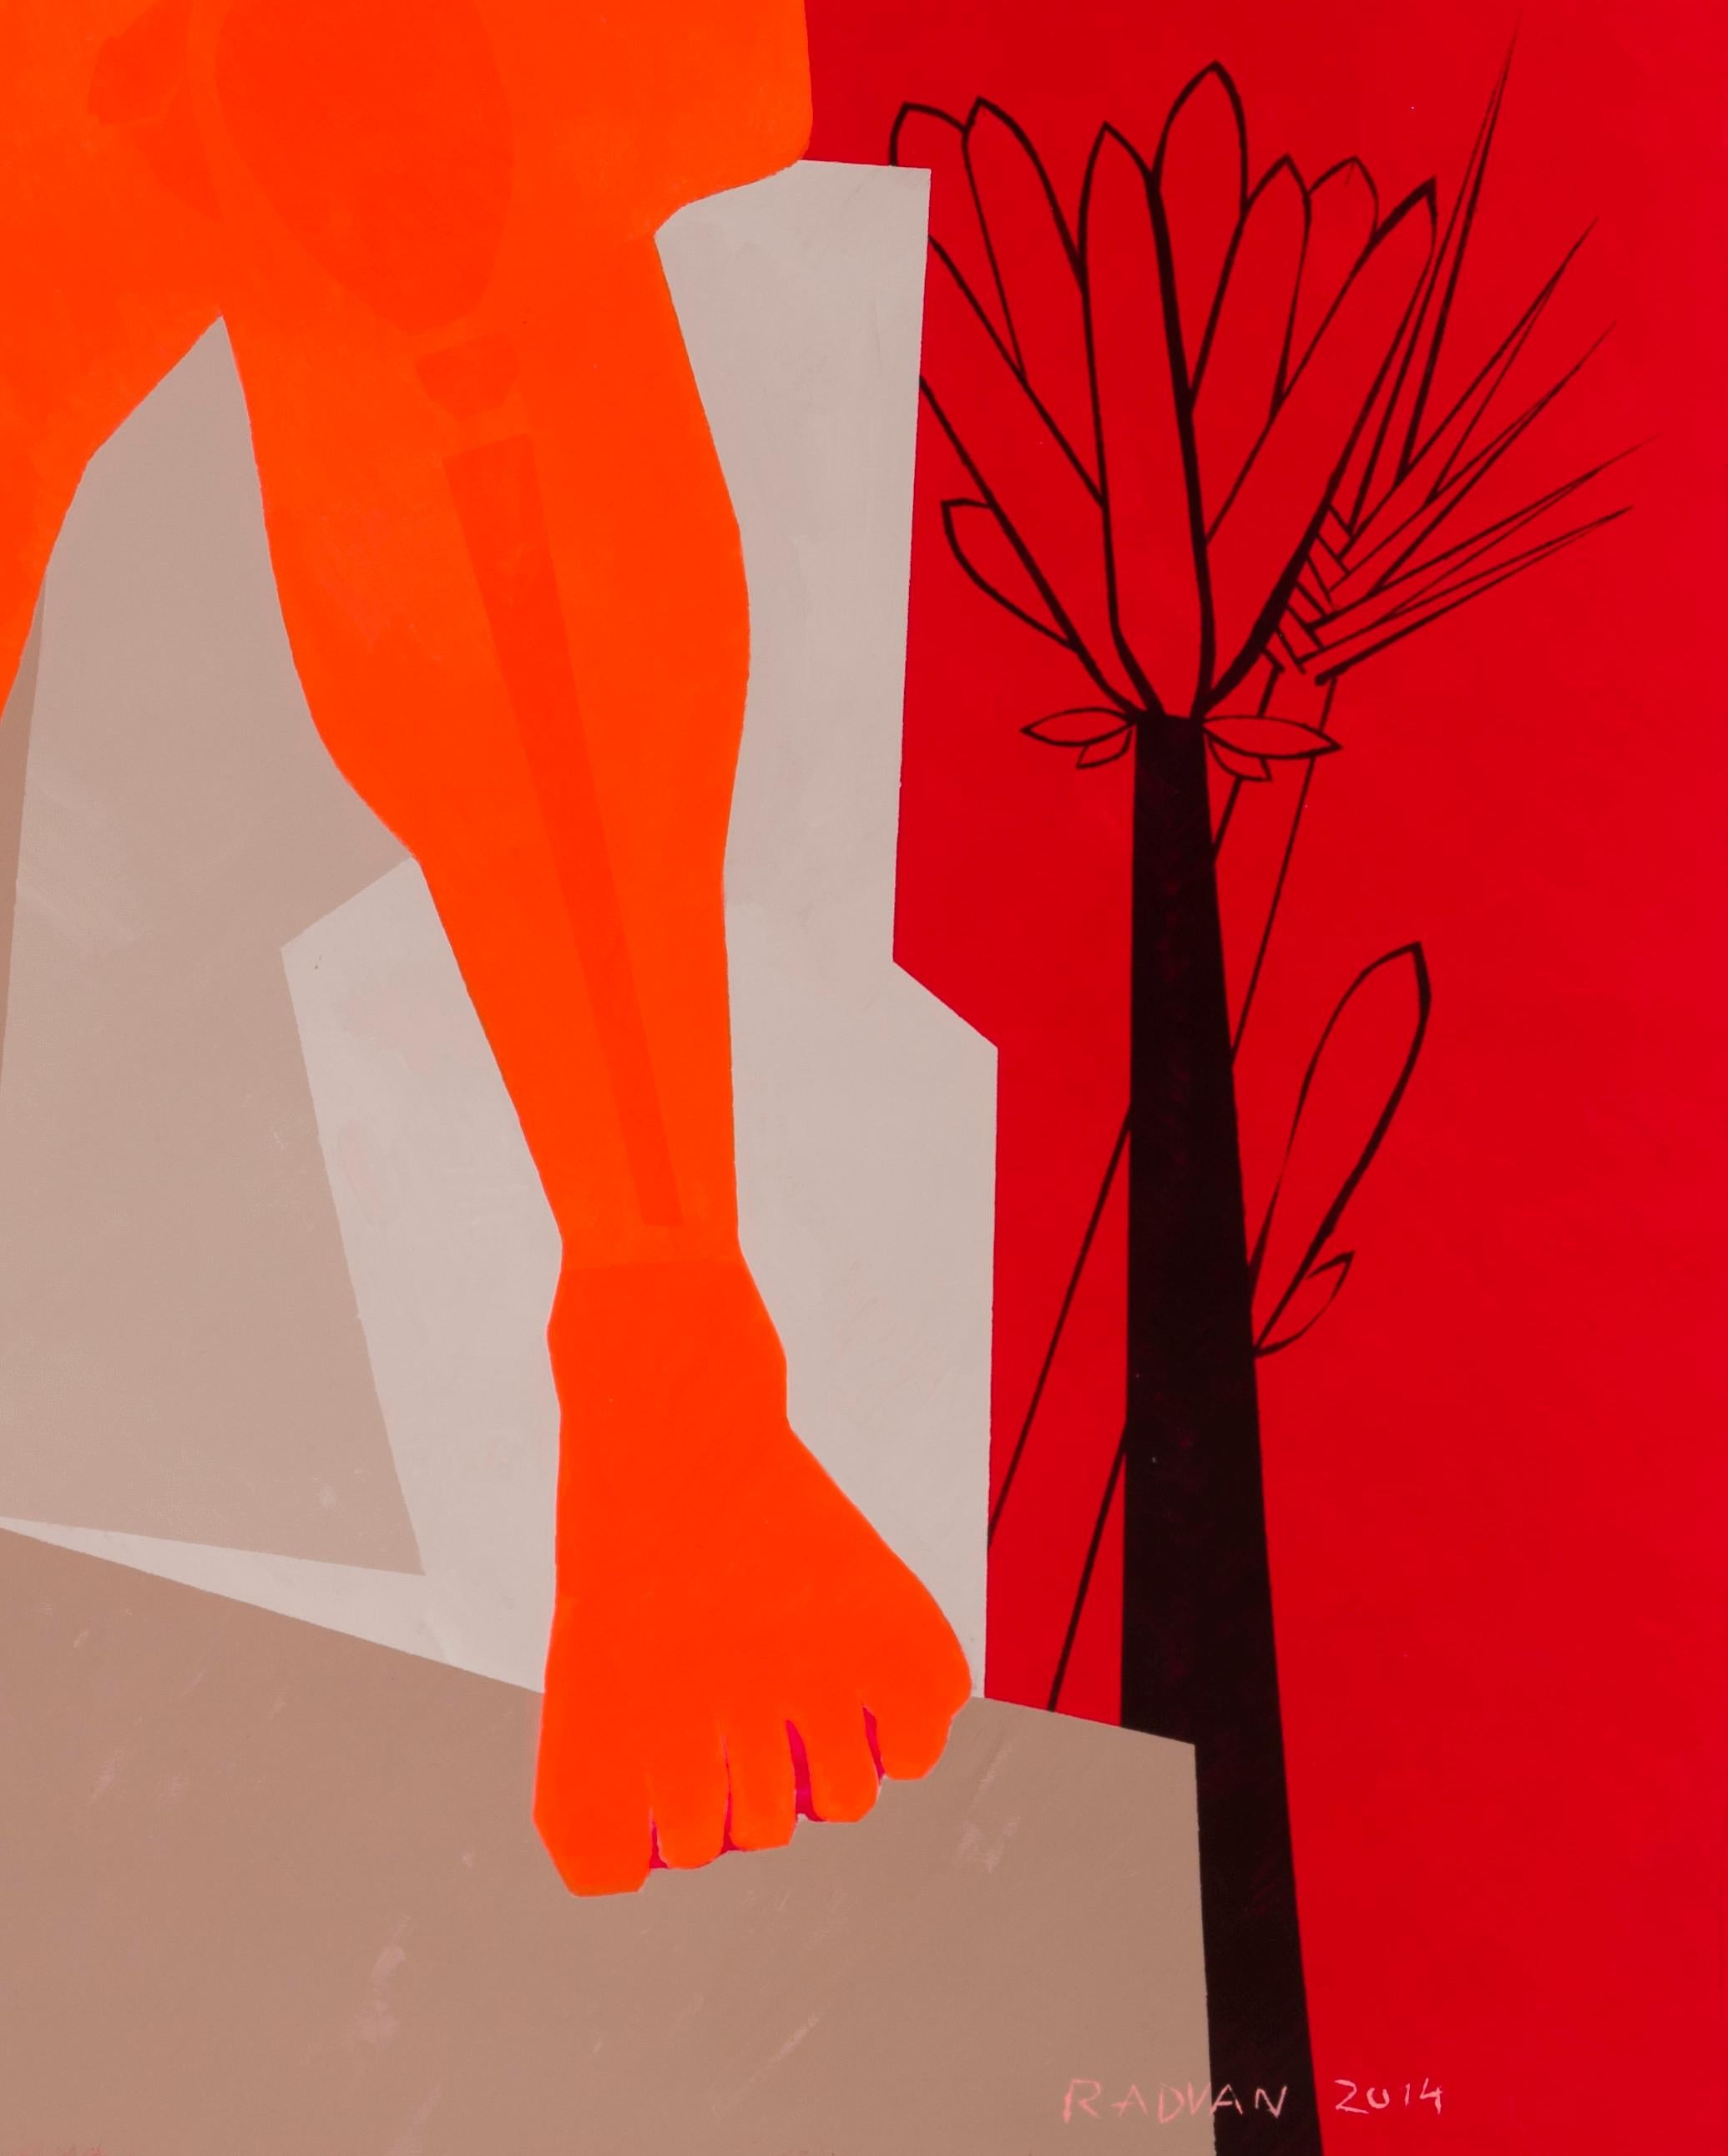 Hercules after Carracci - 21st Century, Orange, Red, Human, Warrior, Hero - Contemporary Painting by Alexandru Rădvan